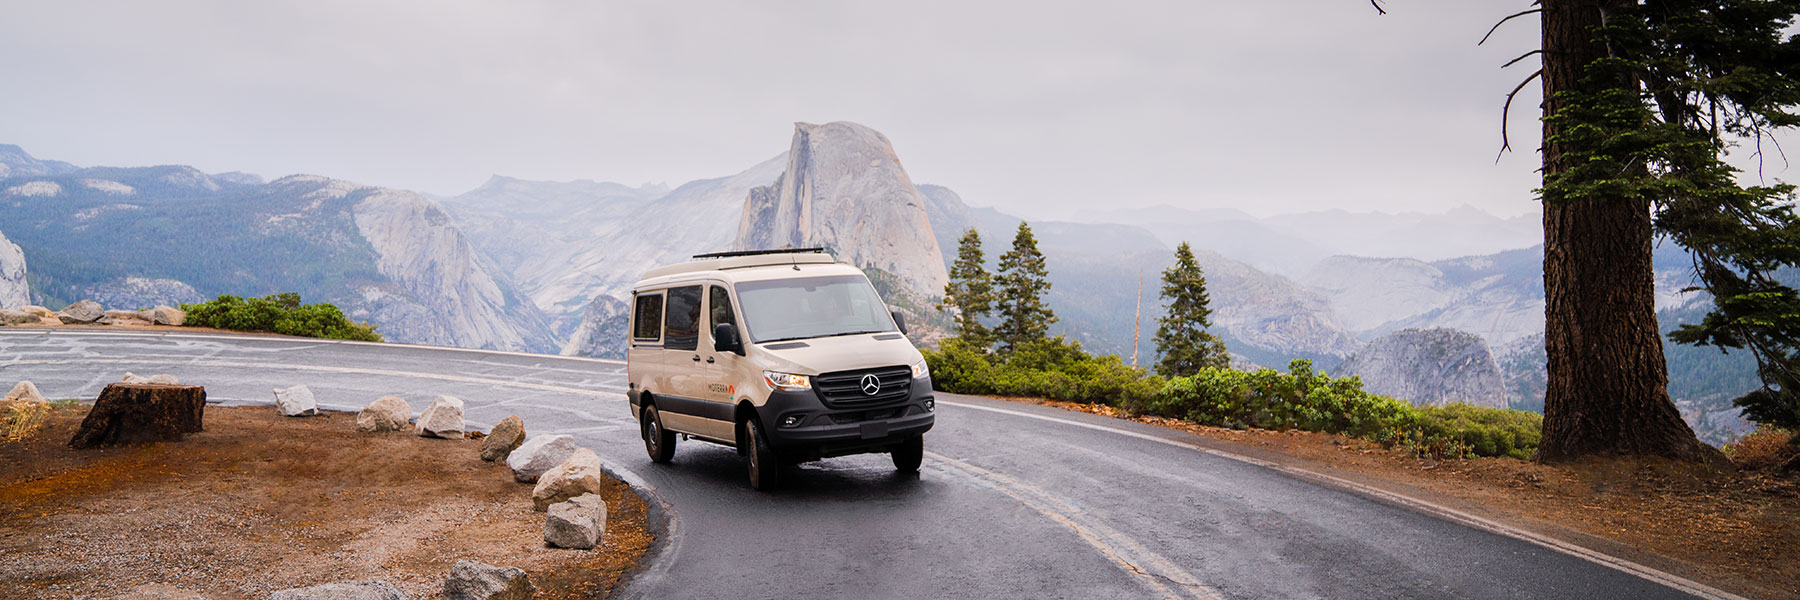 Moterra Mercedes Sprinter Campervan on Road Trip Through Yosemite with Half Dome in Background